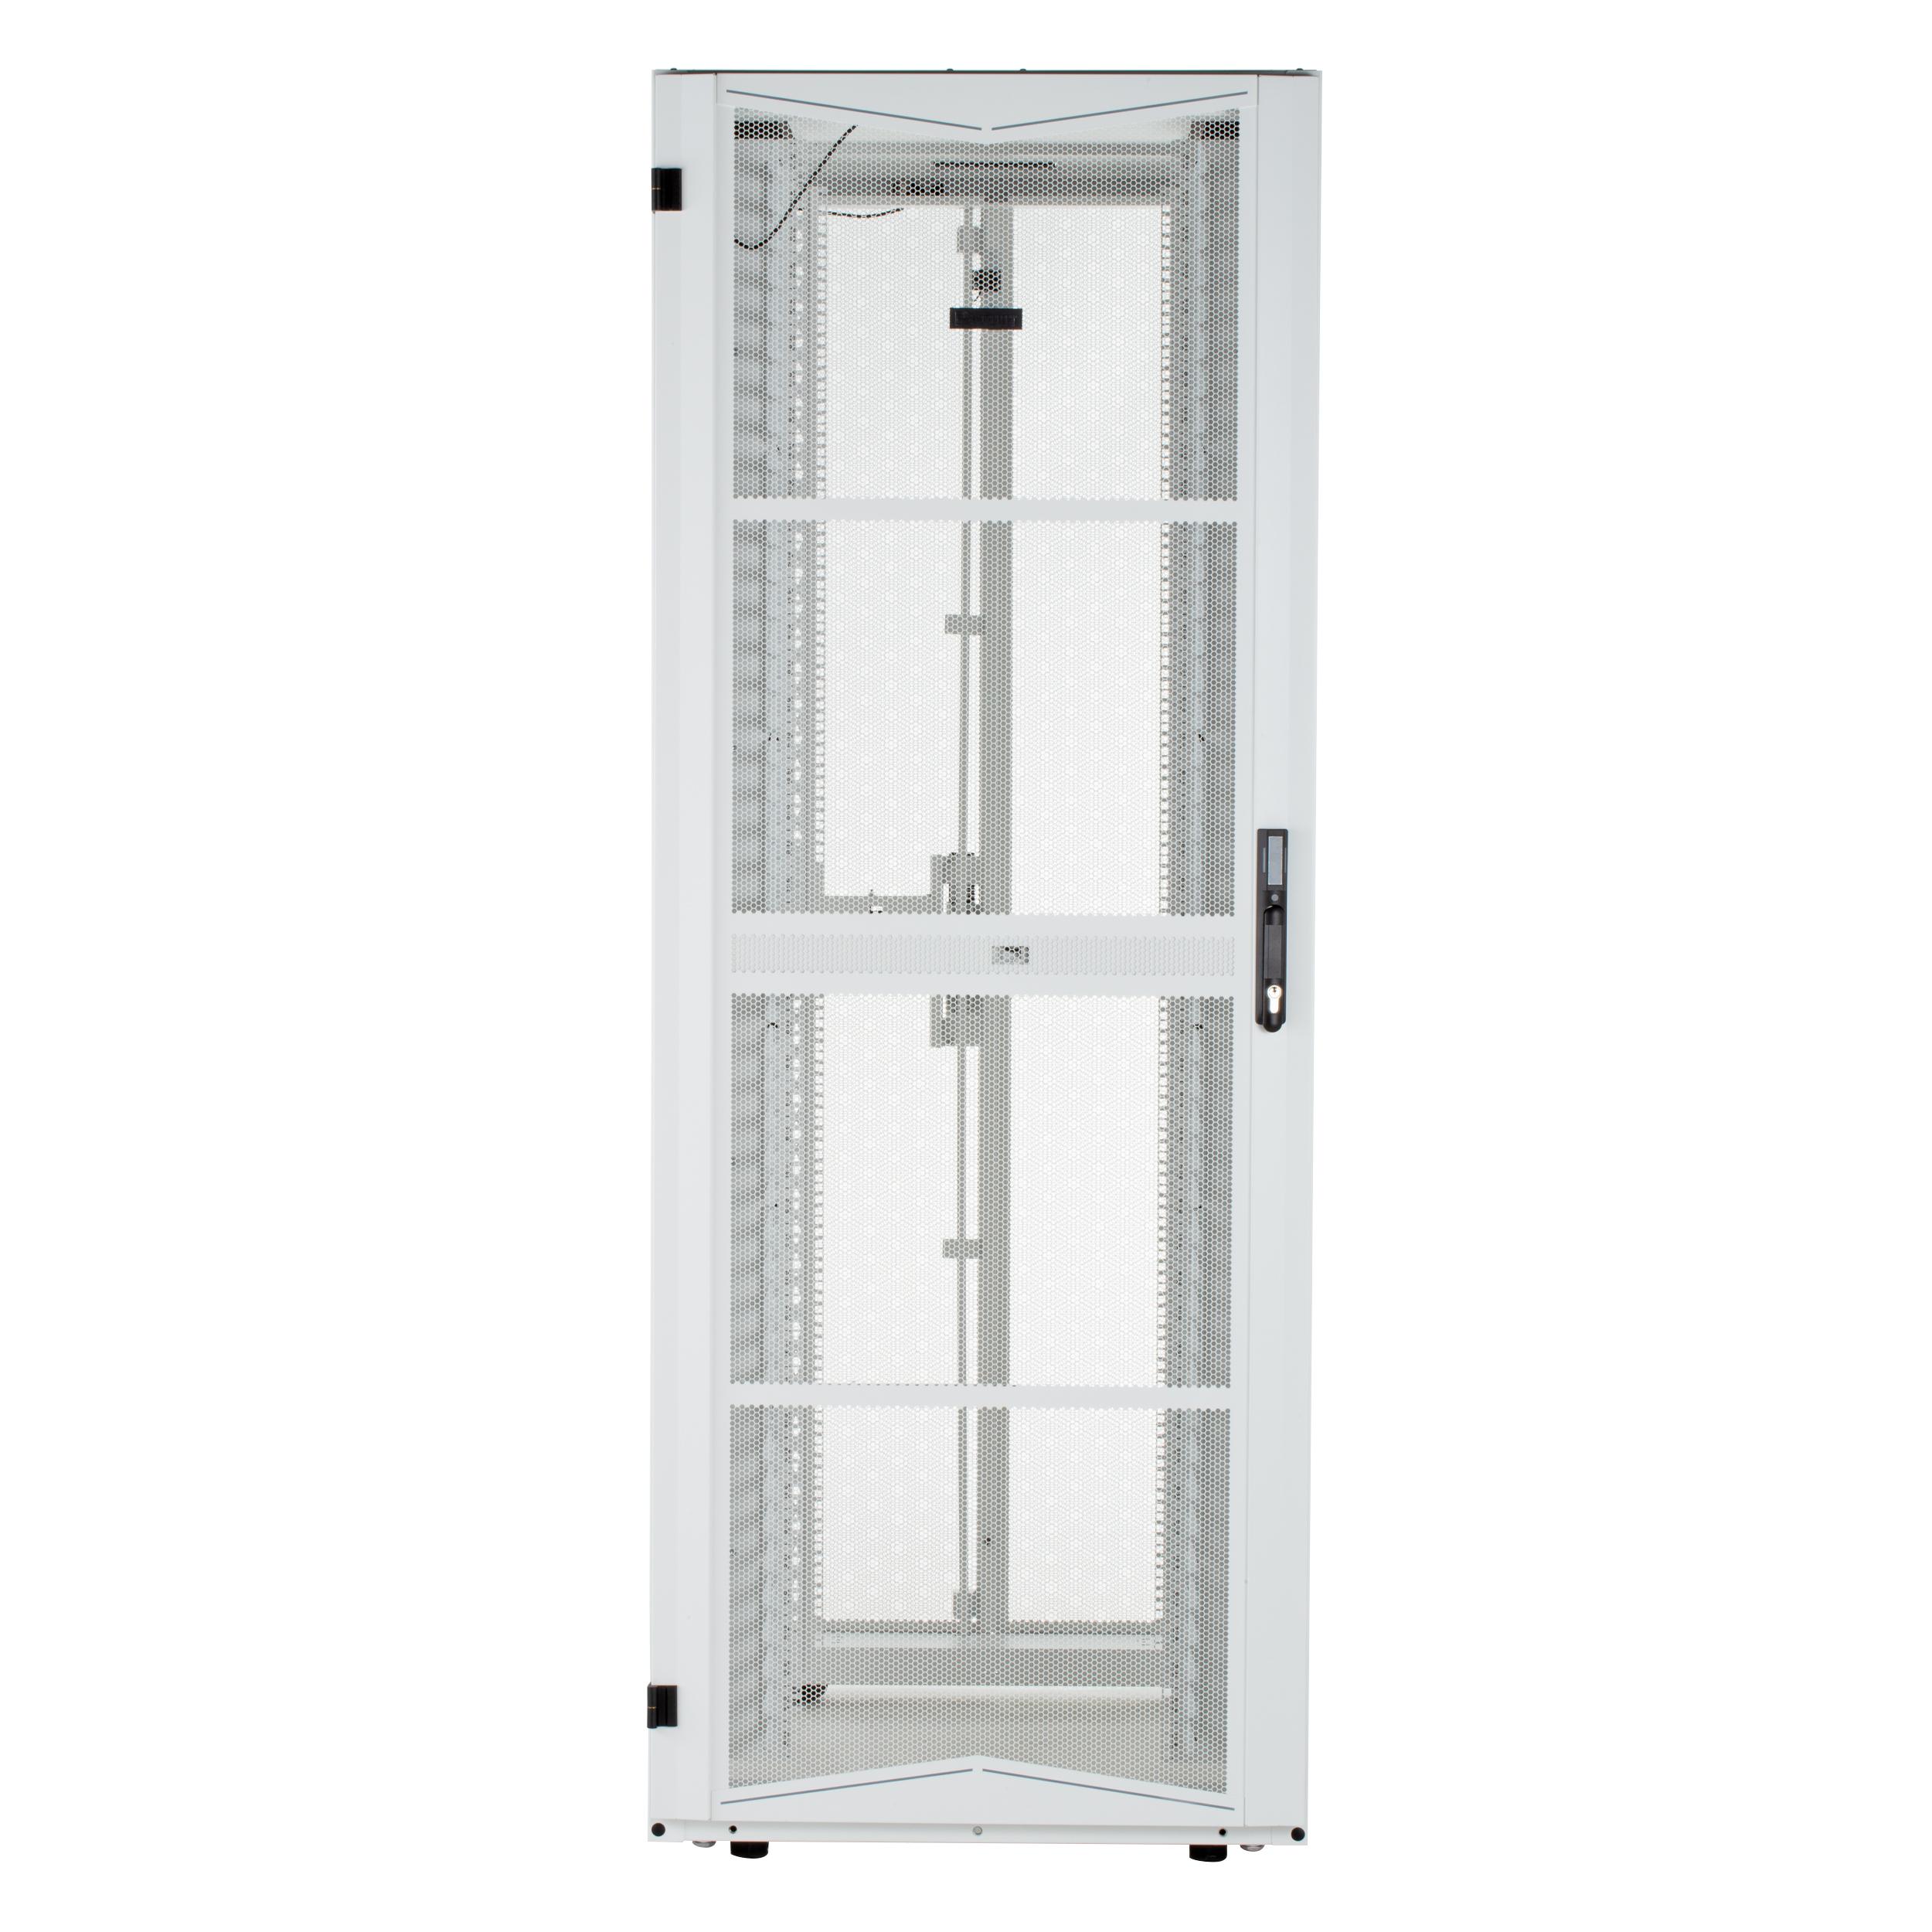 Panduit XG84822WS0005 FlexFusion Cabinet, 800mm x 48RU x 1200mm, White